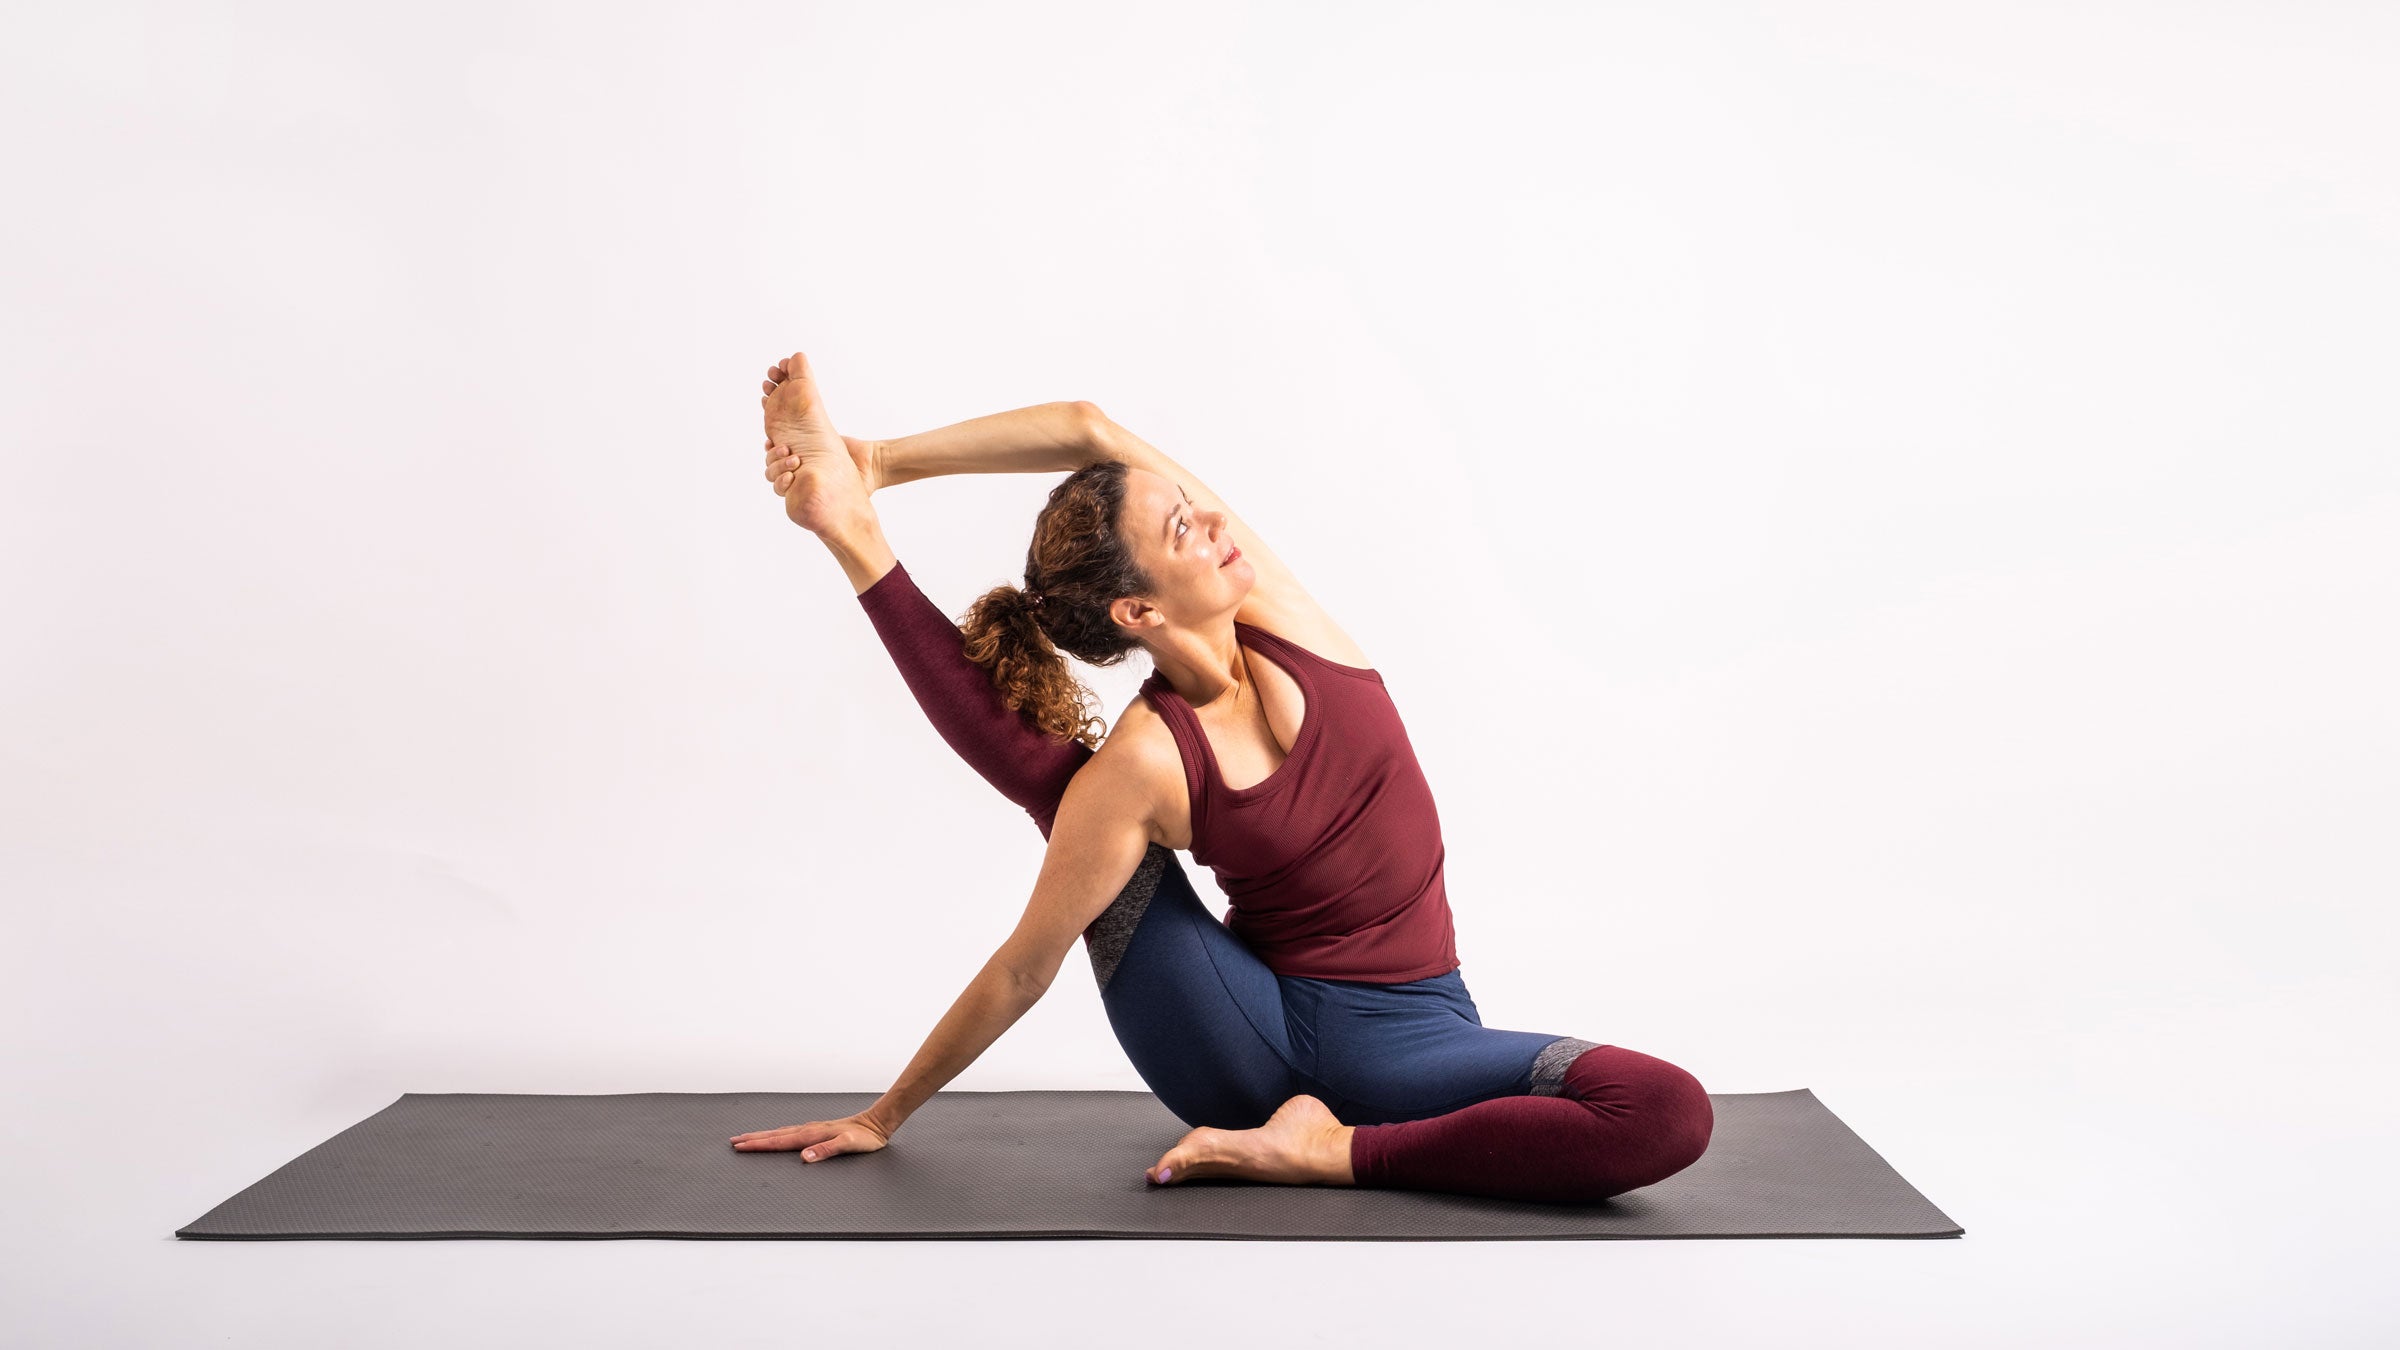 Yoga Poses to Tone Upper Body | POPSUGAR Fitness